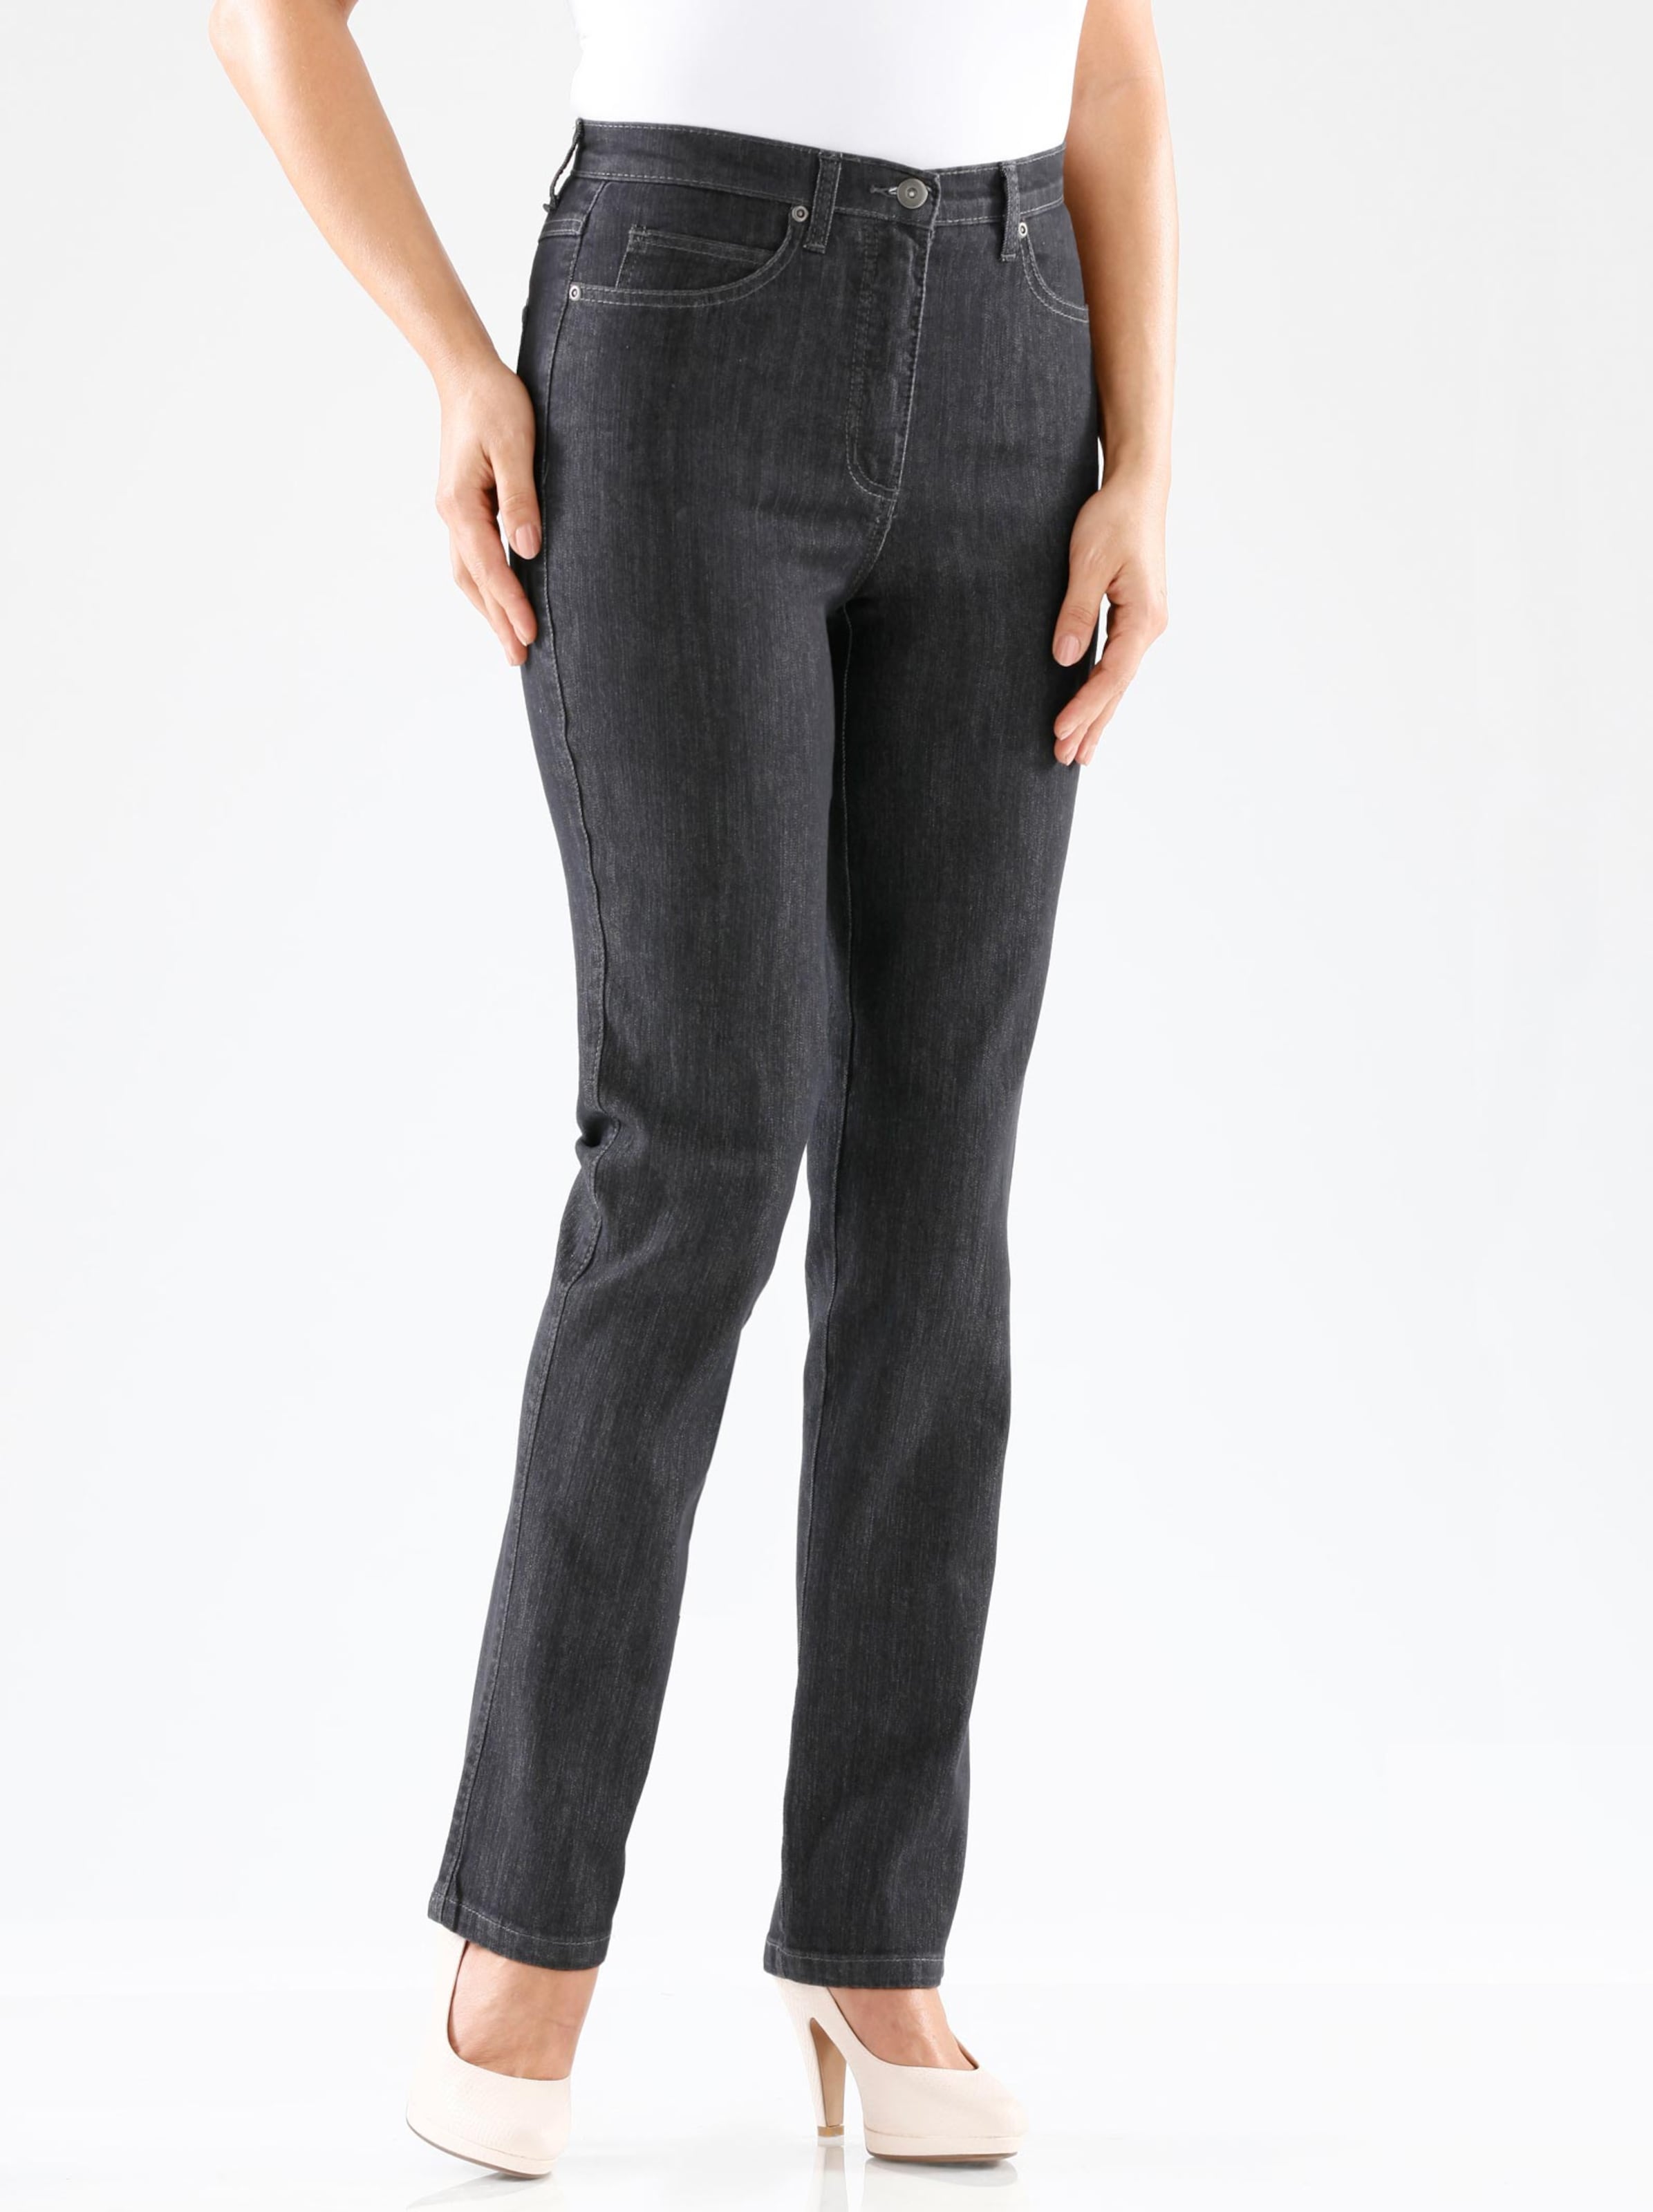 Damenmode Jeans 5-Pocket-Jeans in black-denim 